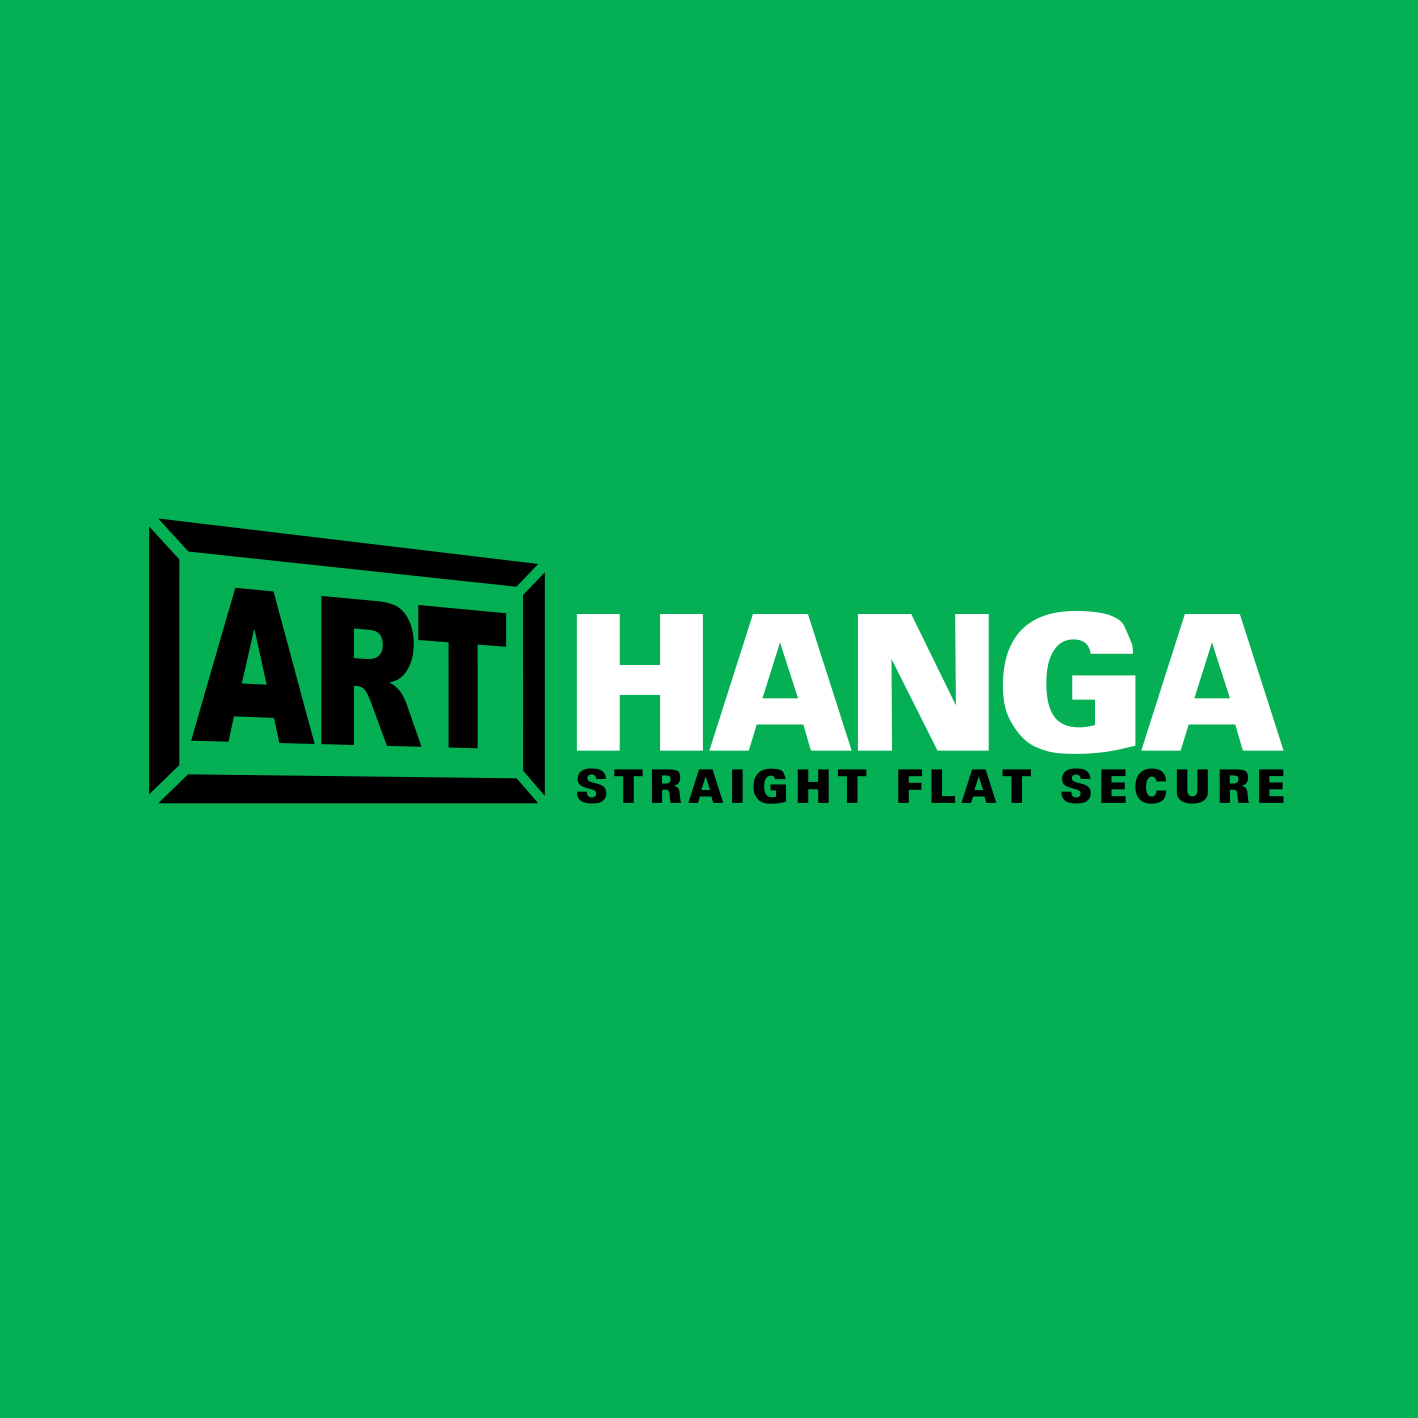 Arthanga logo _Green.png